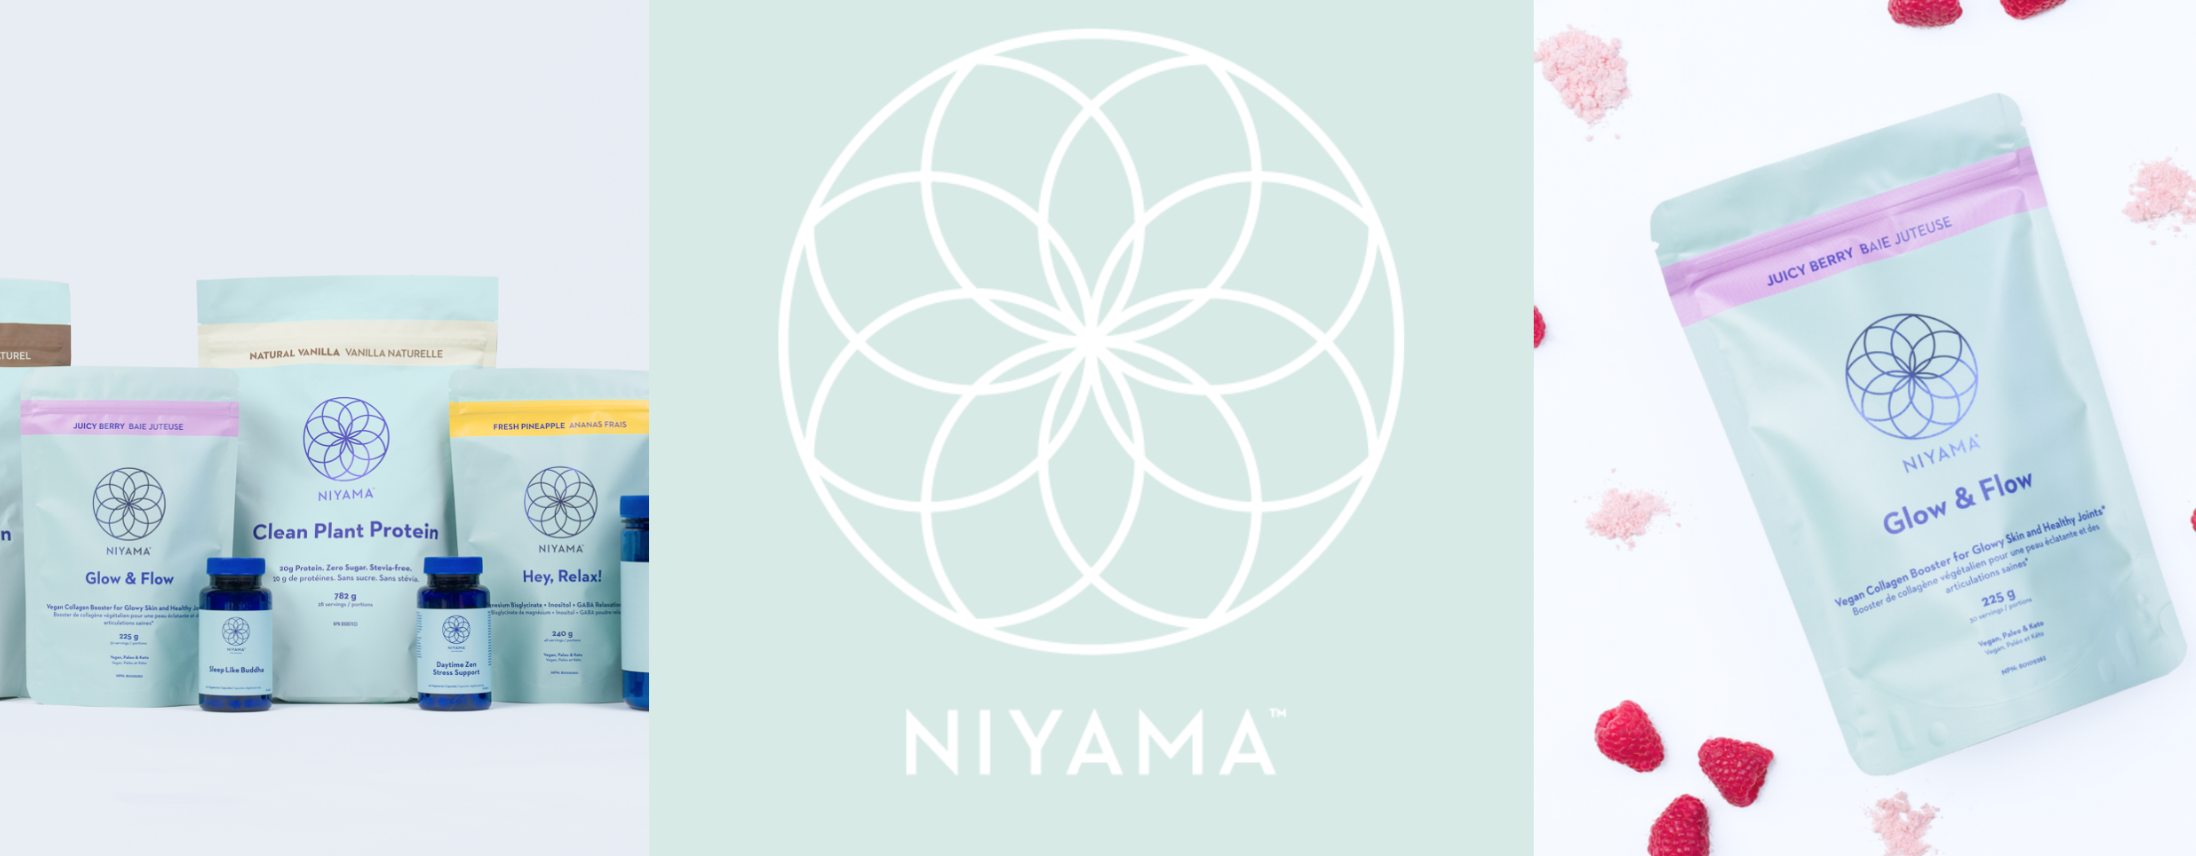 niyama wellness